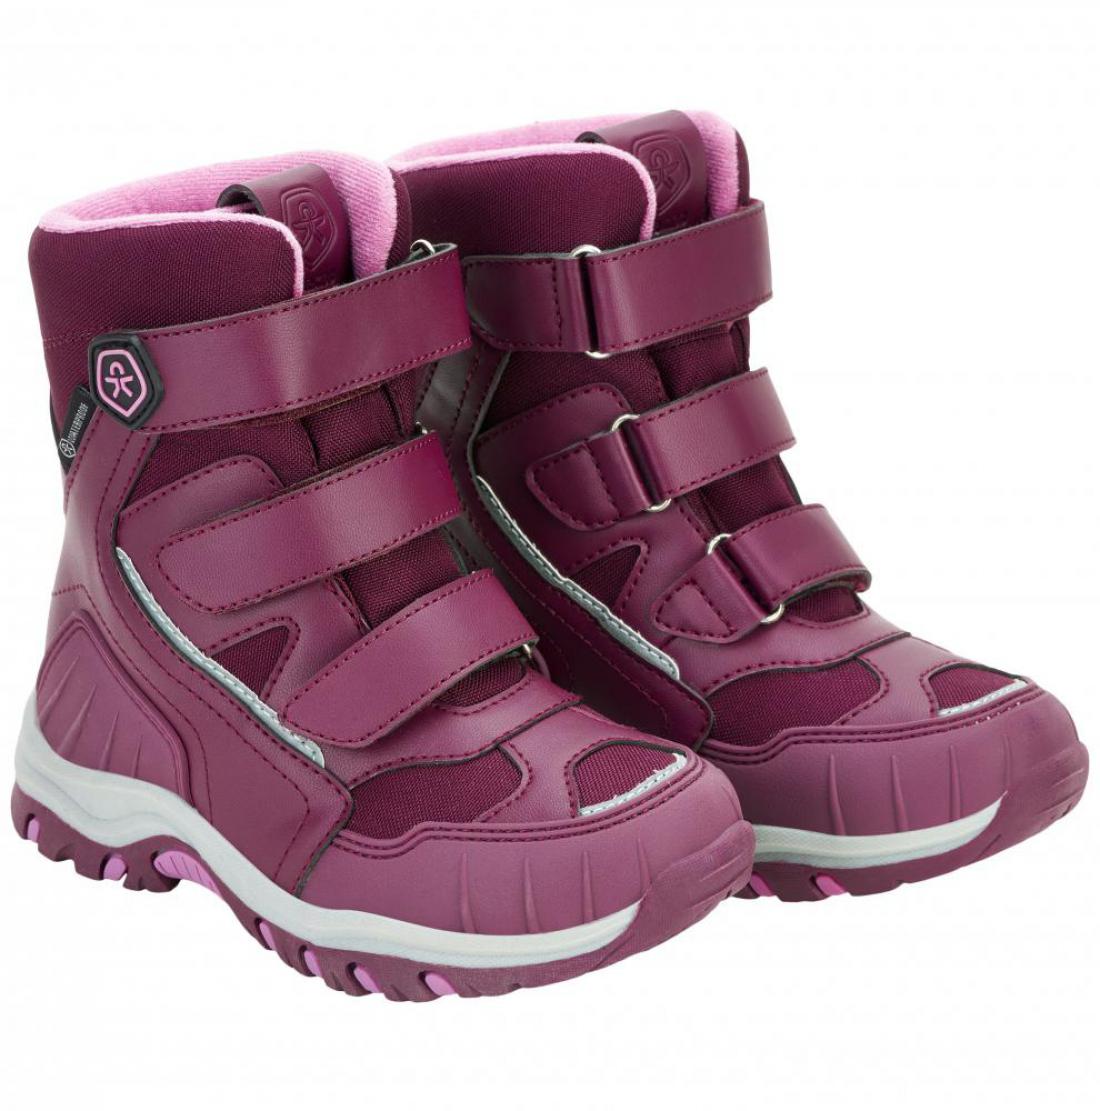 Boots high cut w. 3 velcro, WP, potent purple, size 35